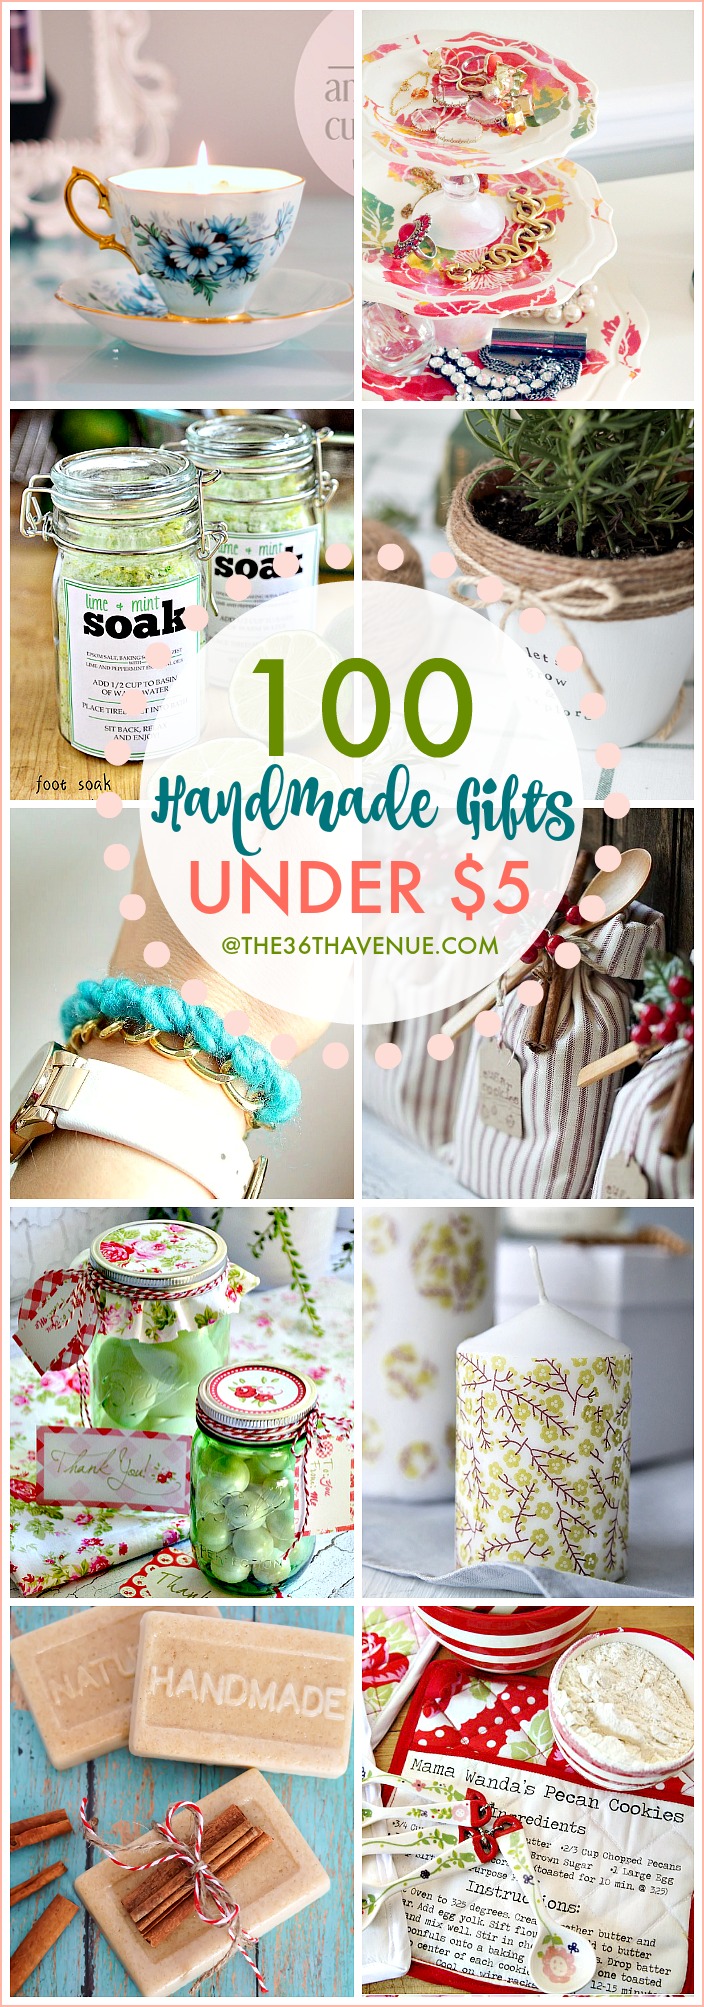 Simple Homemade Gifts Under $5 - JOYFUL DAISY